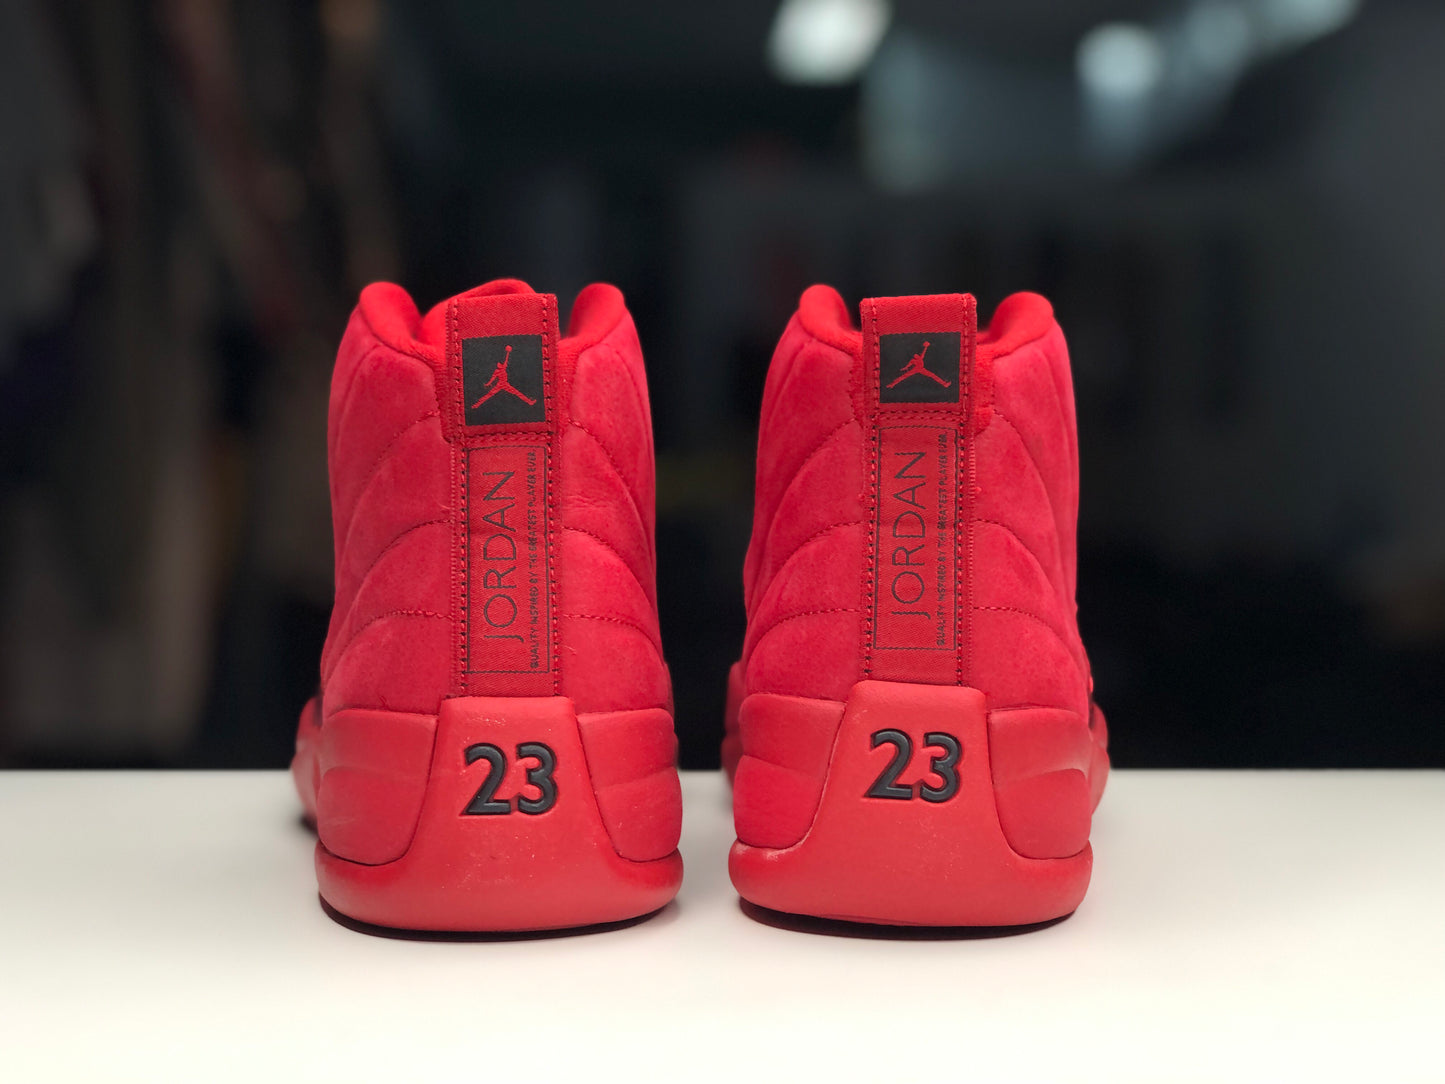 Brand New Jordan 12 Gym Red 2018 size 9.5